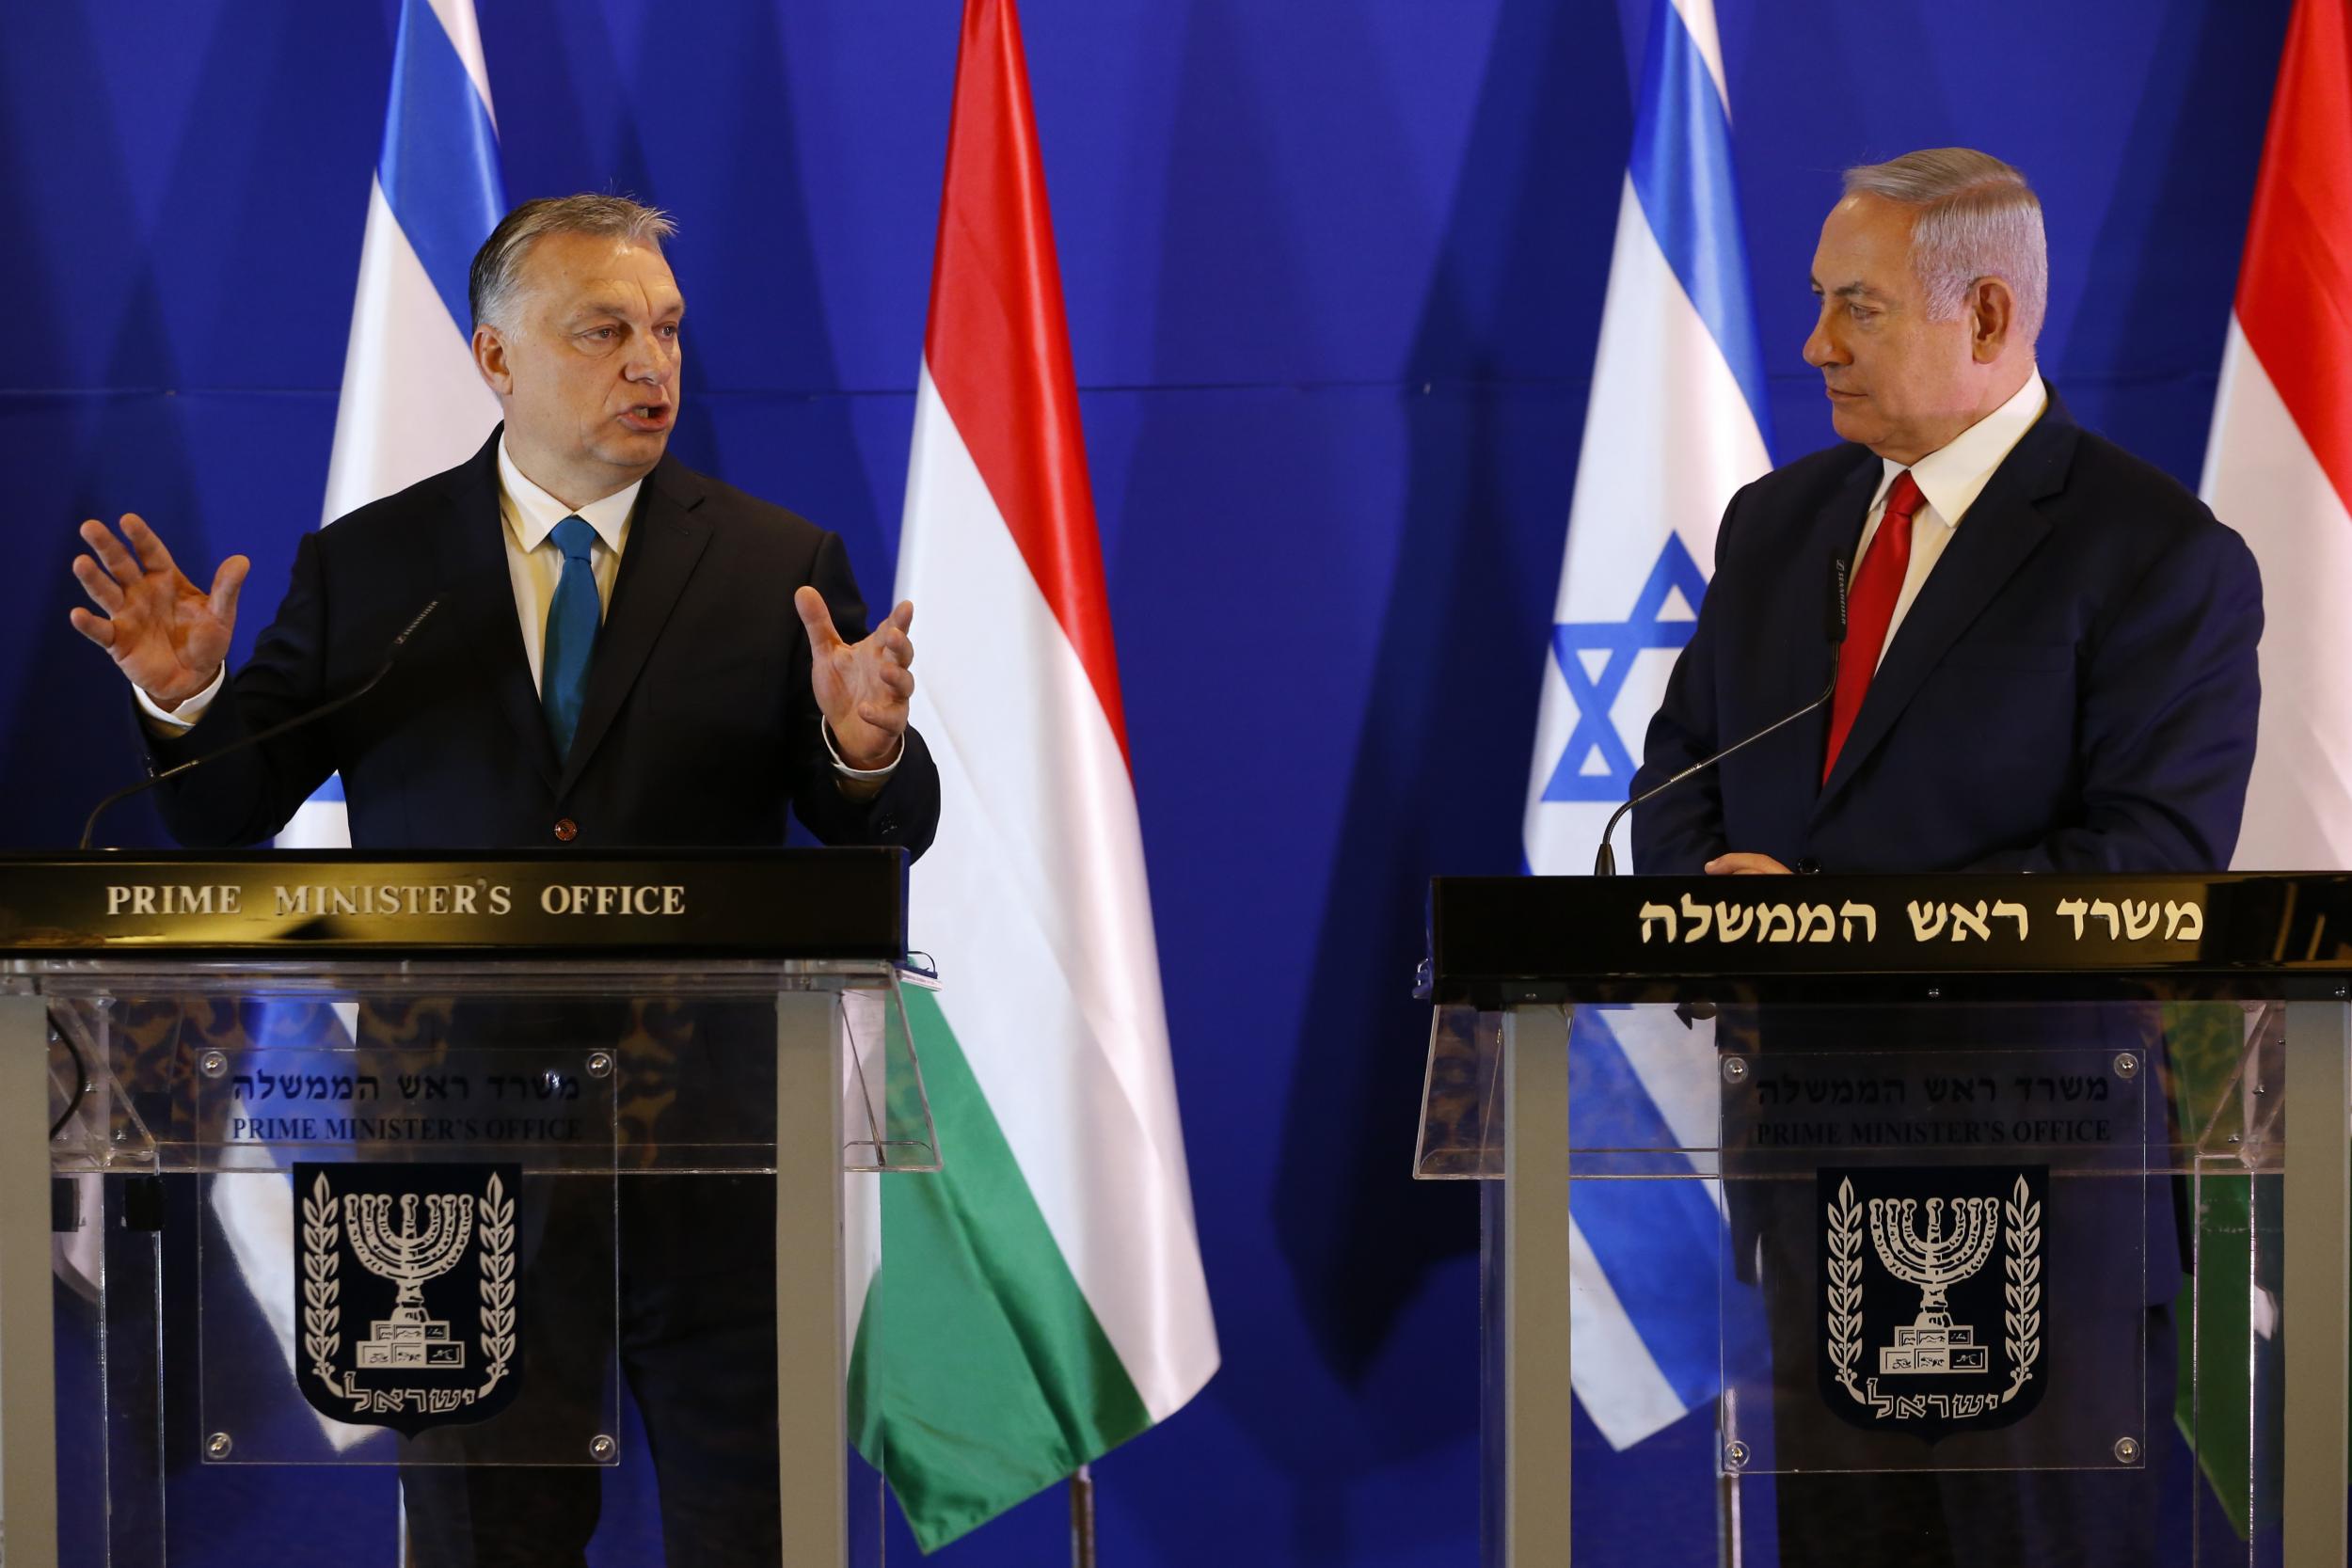 Hungarian prime minister Viktor Orban, left, and Israeli prime minister Benjamin Netanyahu at talks on Tuesday